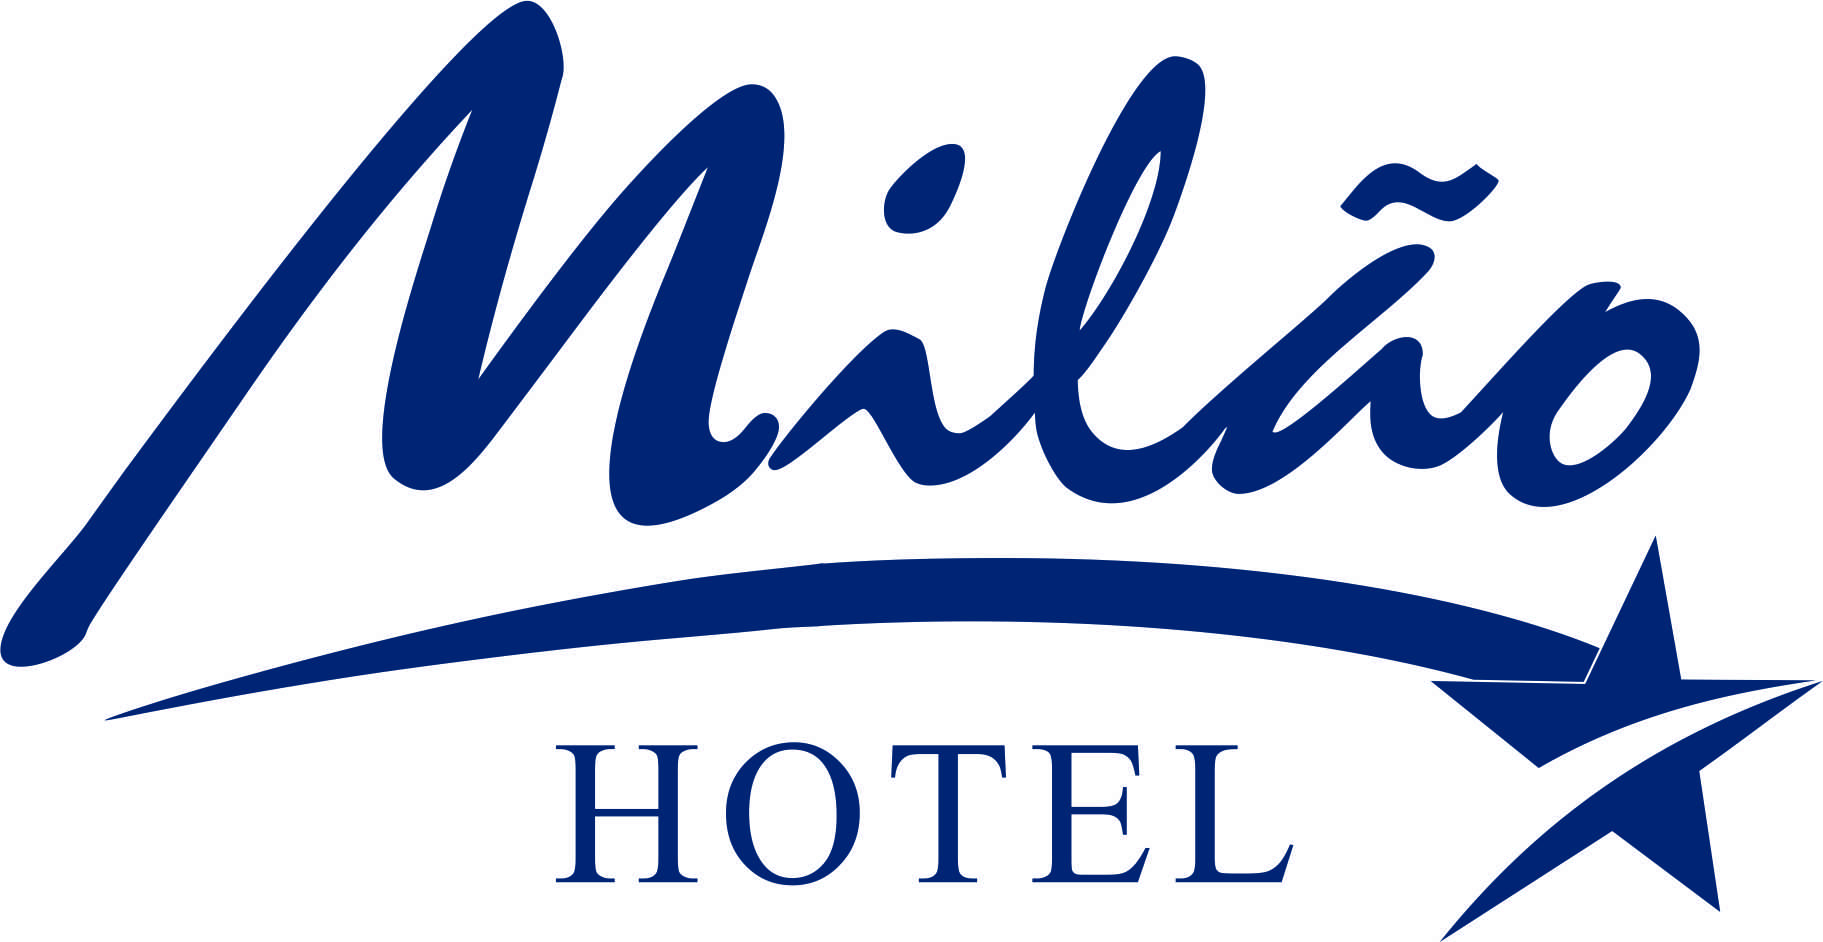 Milão Hotel – Artesanal Sul 2022